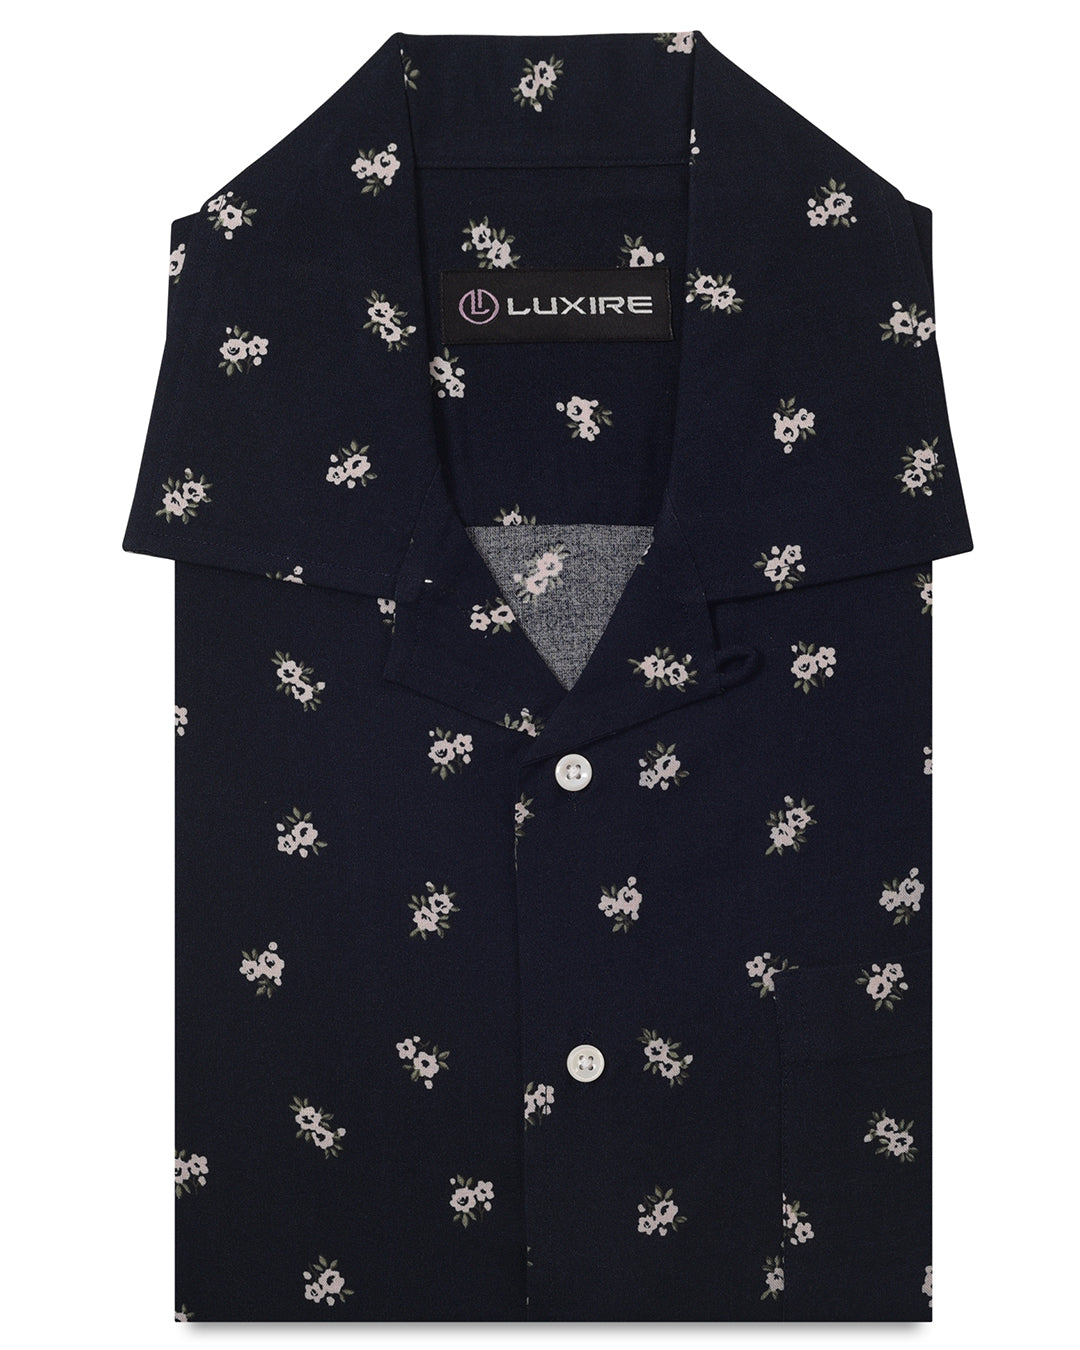 Printed Flower On Dark Navy Shirt